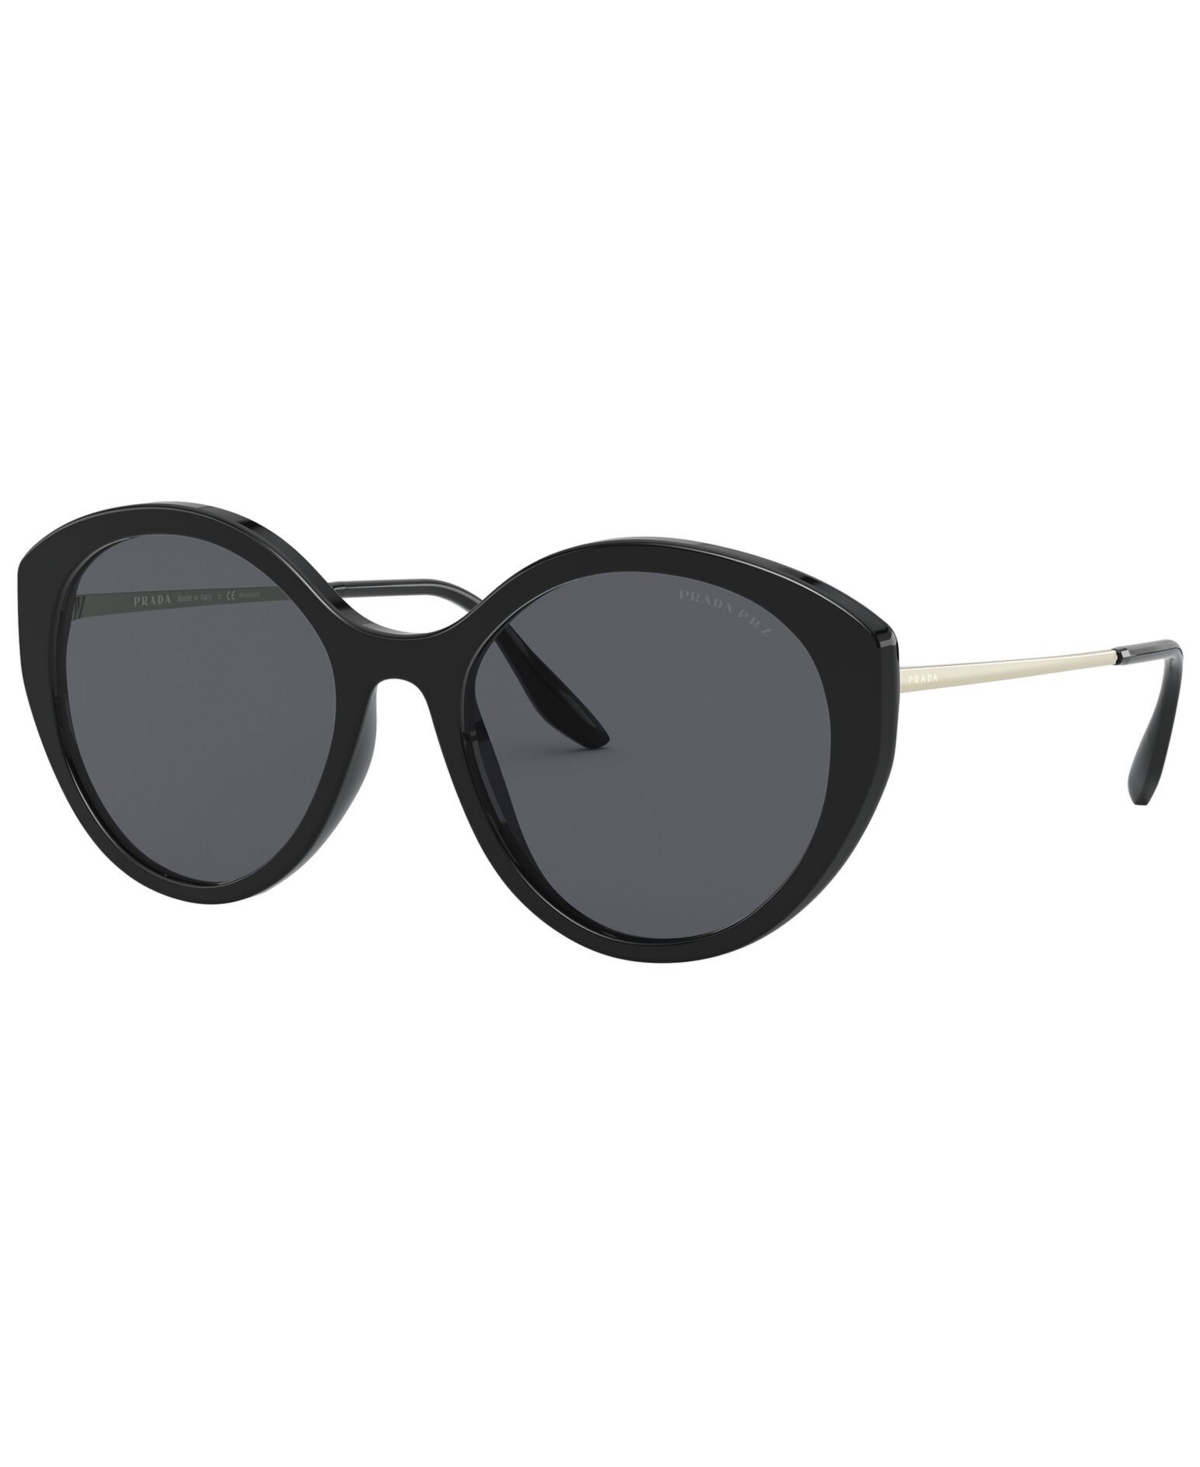 Prada Women's Polarized Sunglasses $186